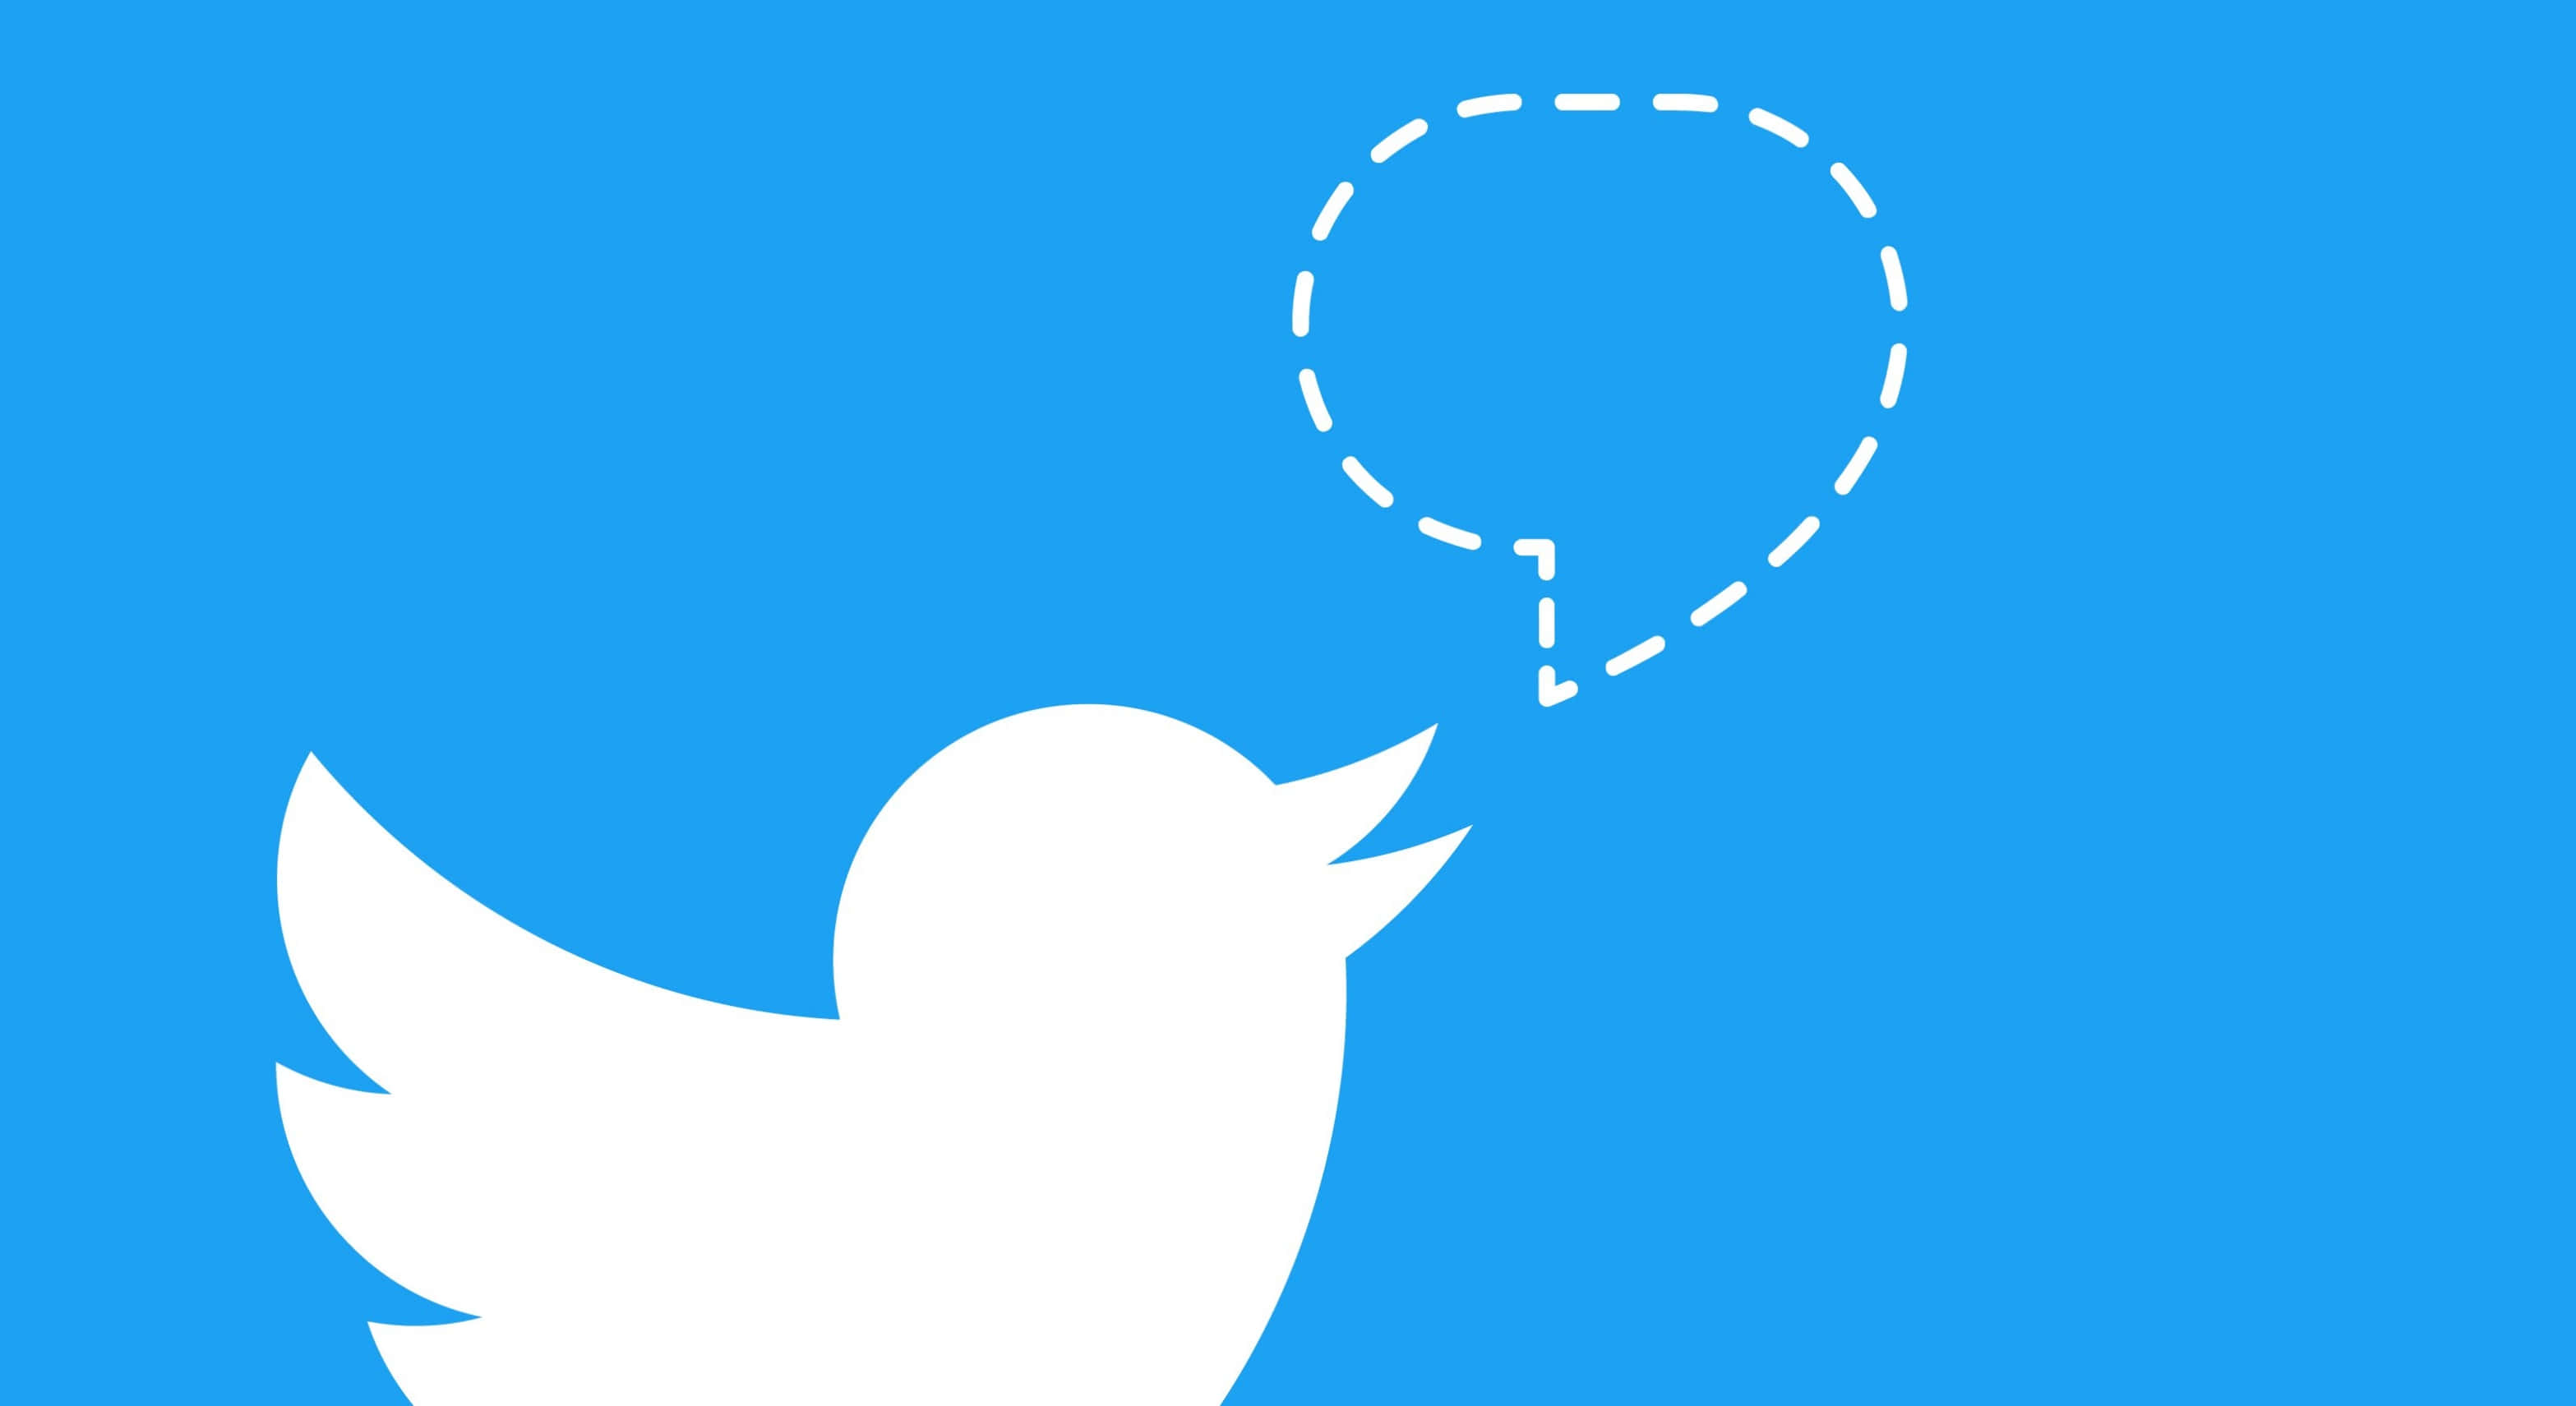 Twitter Logo With A Speech Bubble